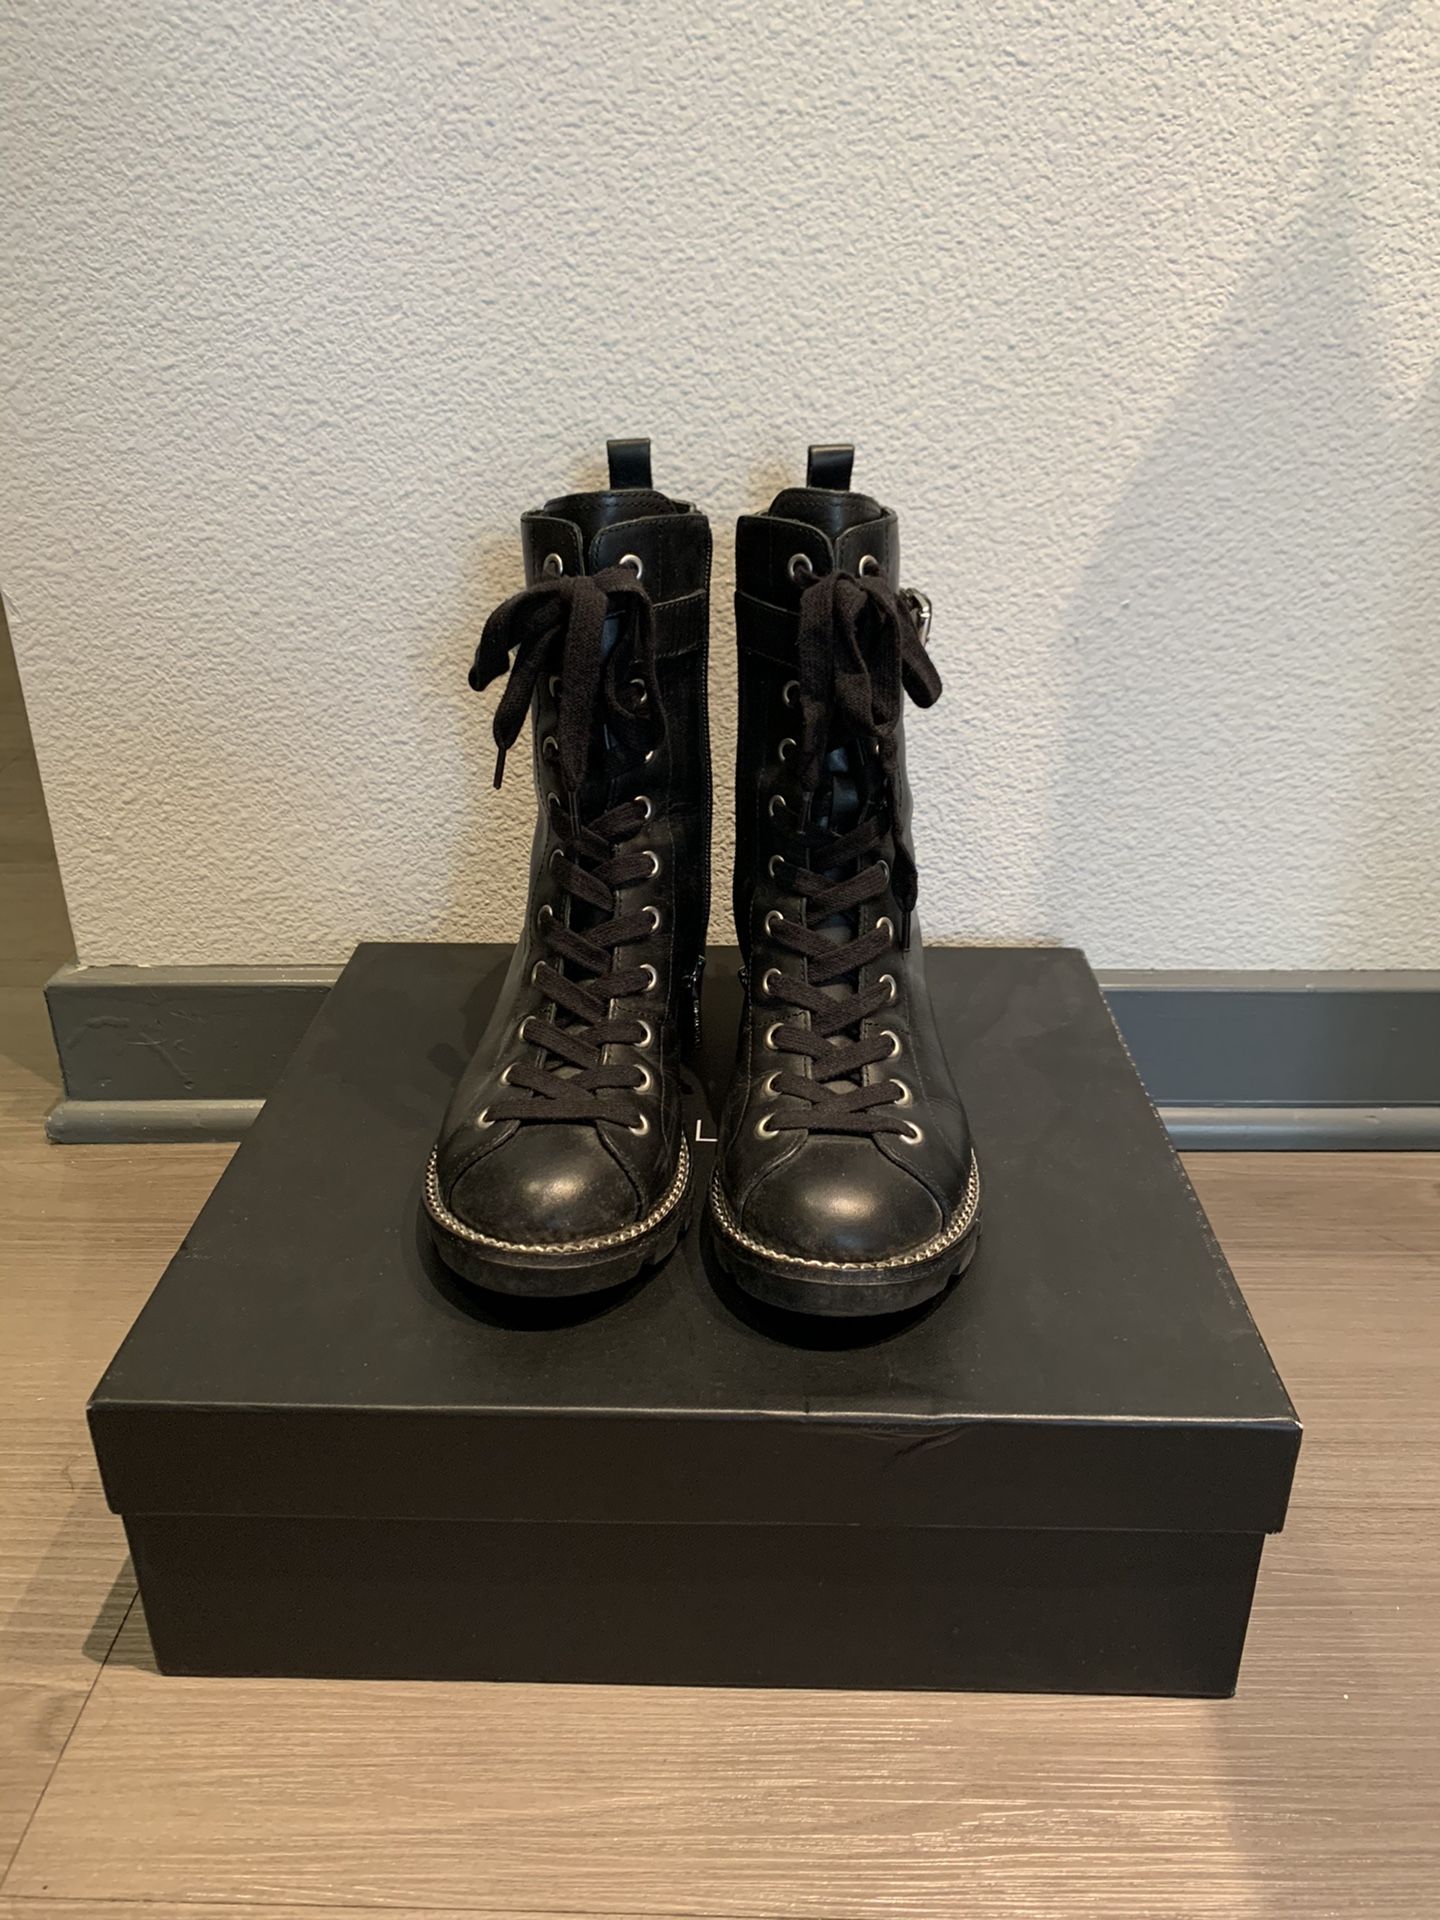 Kendall Kylie Women’s KK Prime Combat Boots Black Leather - Size 6